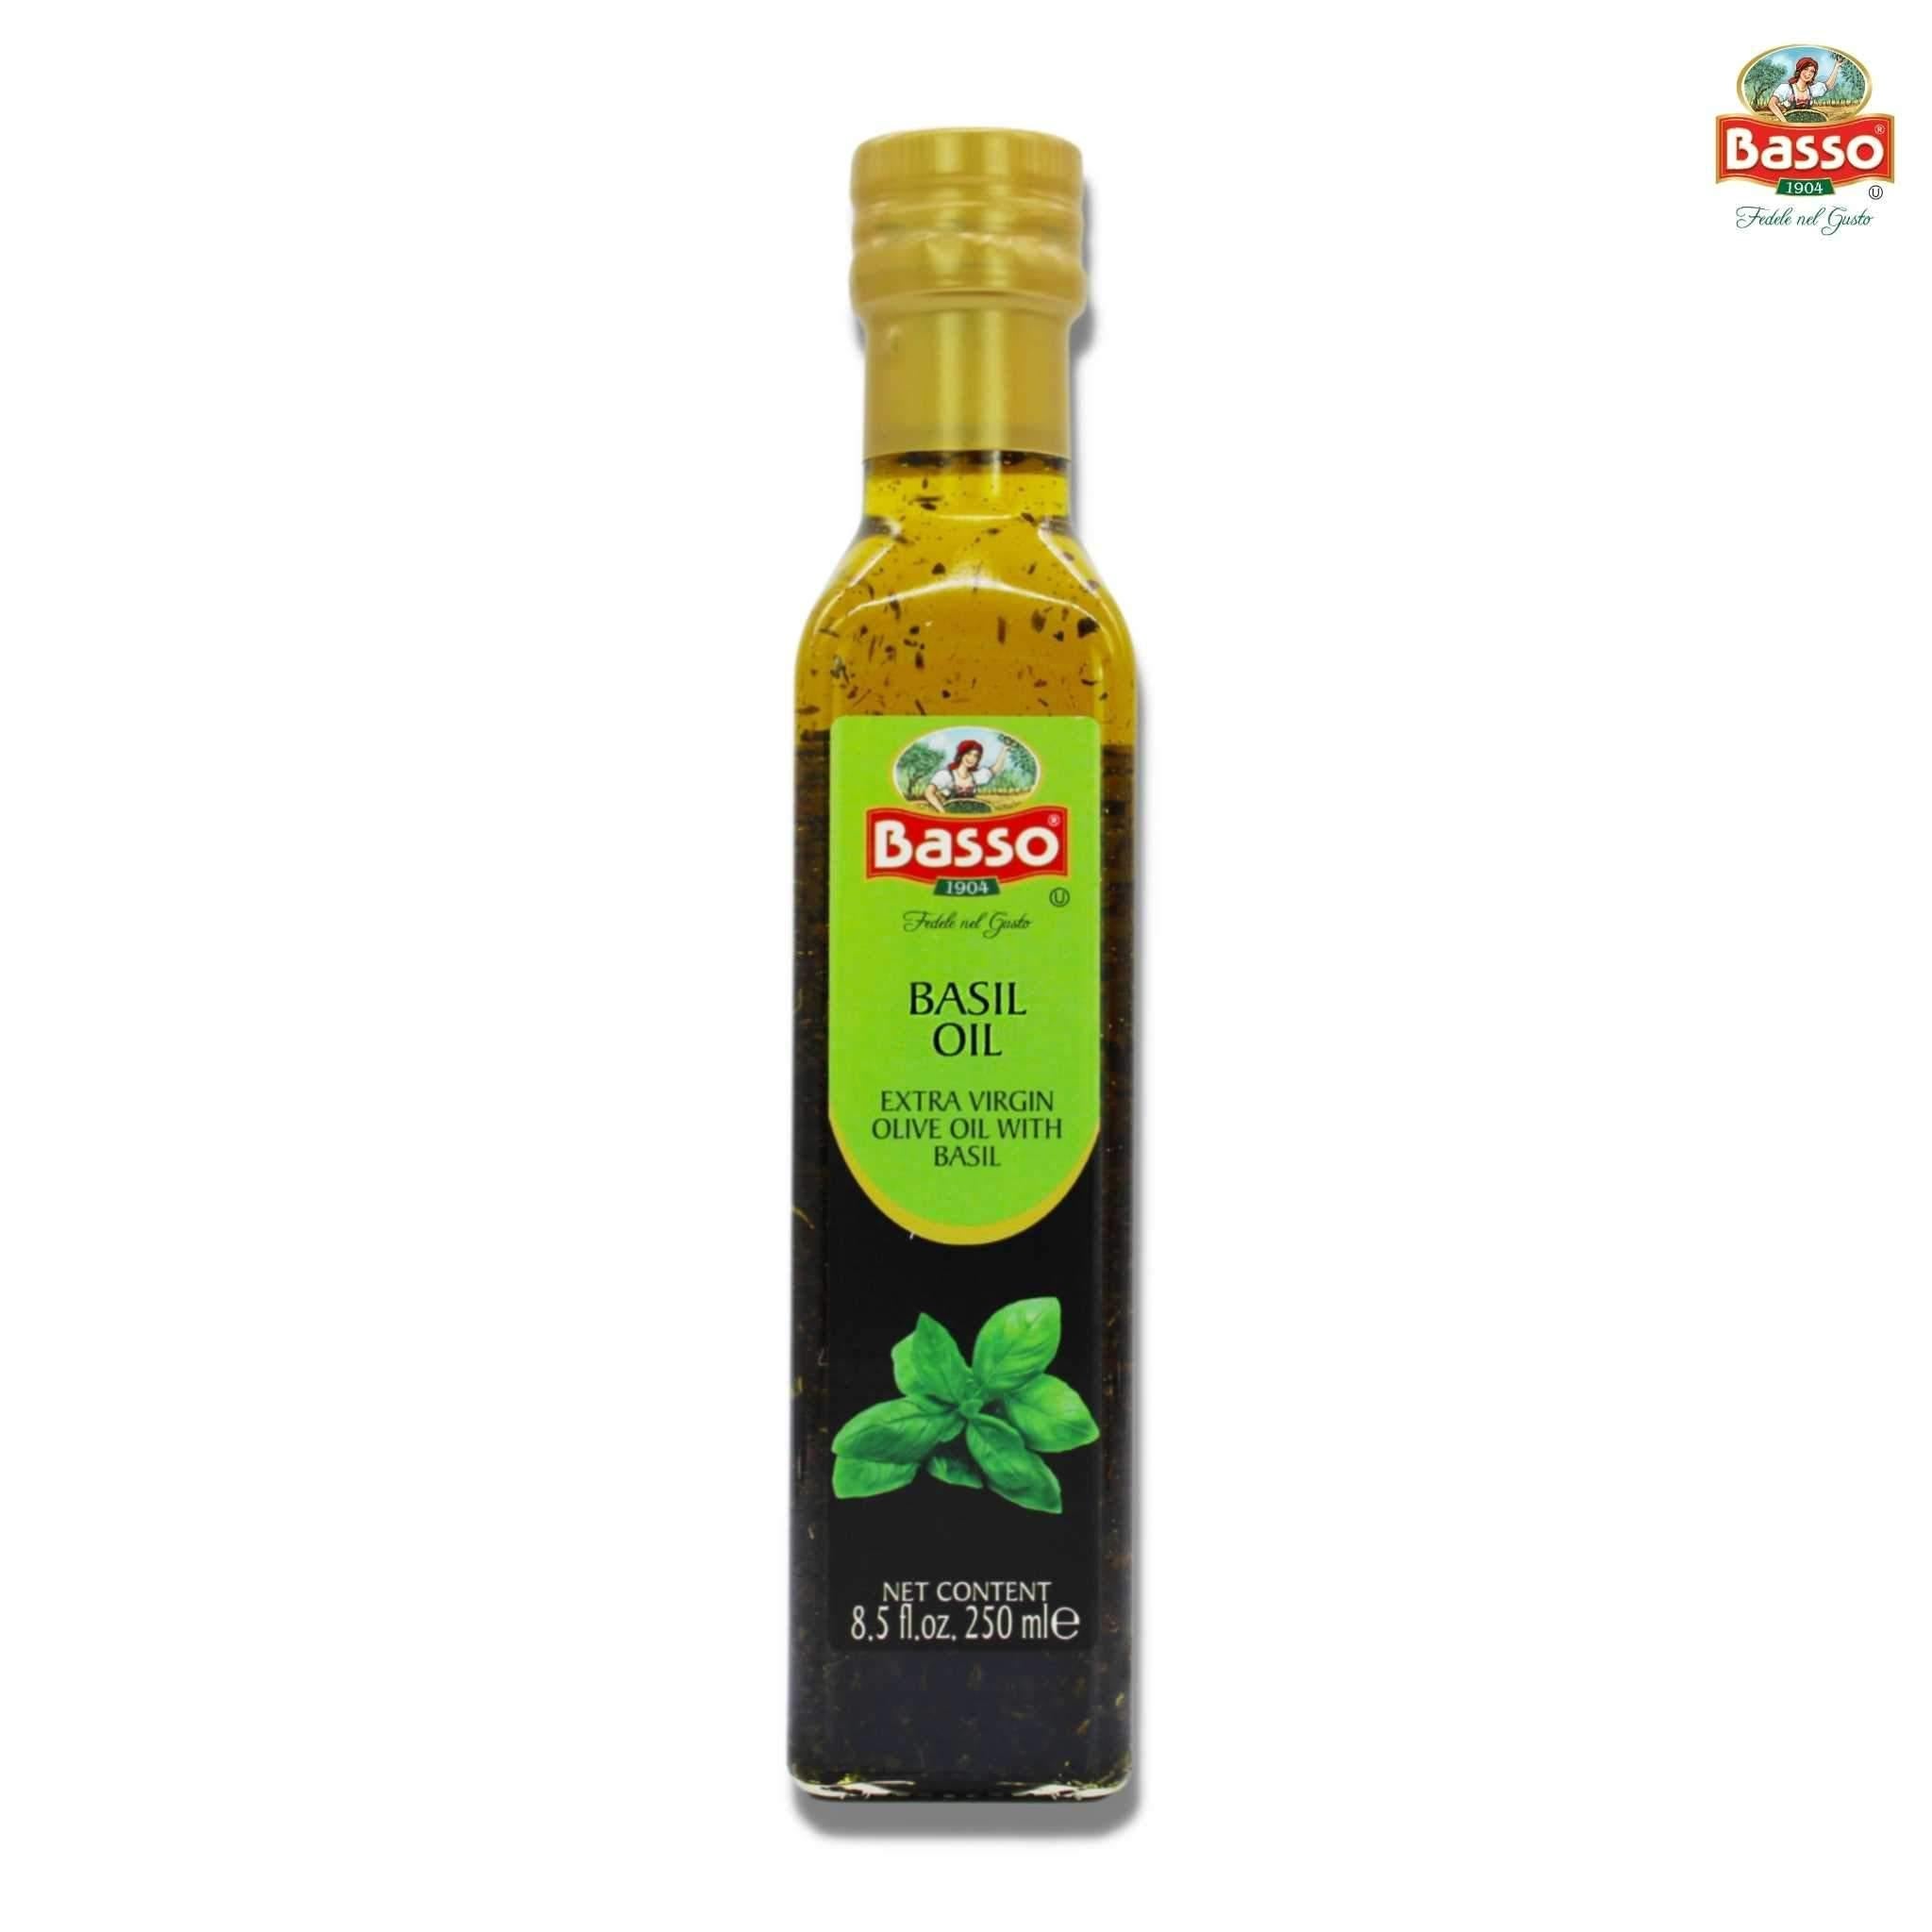 Basso Extra Virgin Olive Oil Basil 8.5 fl oz